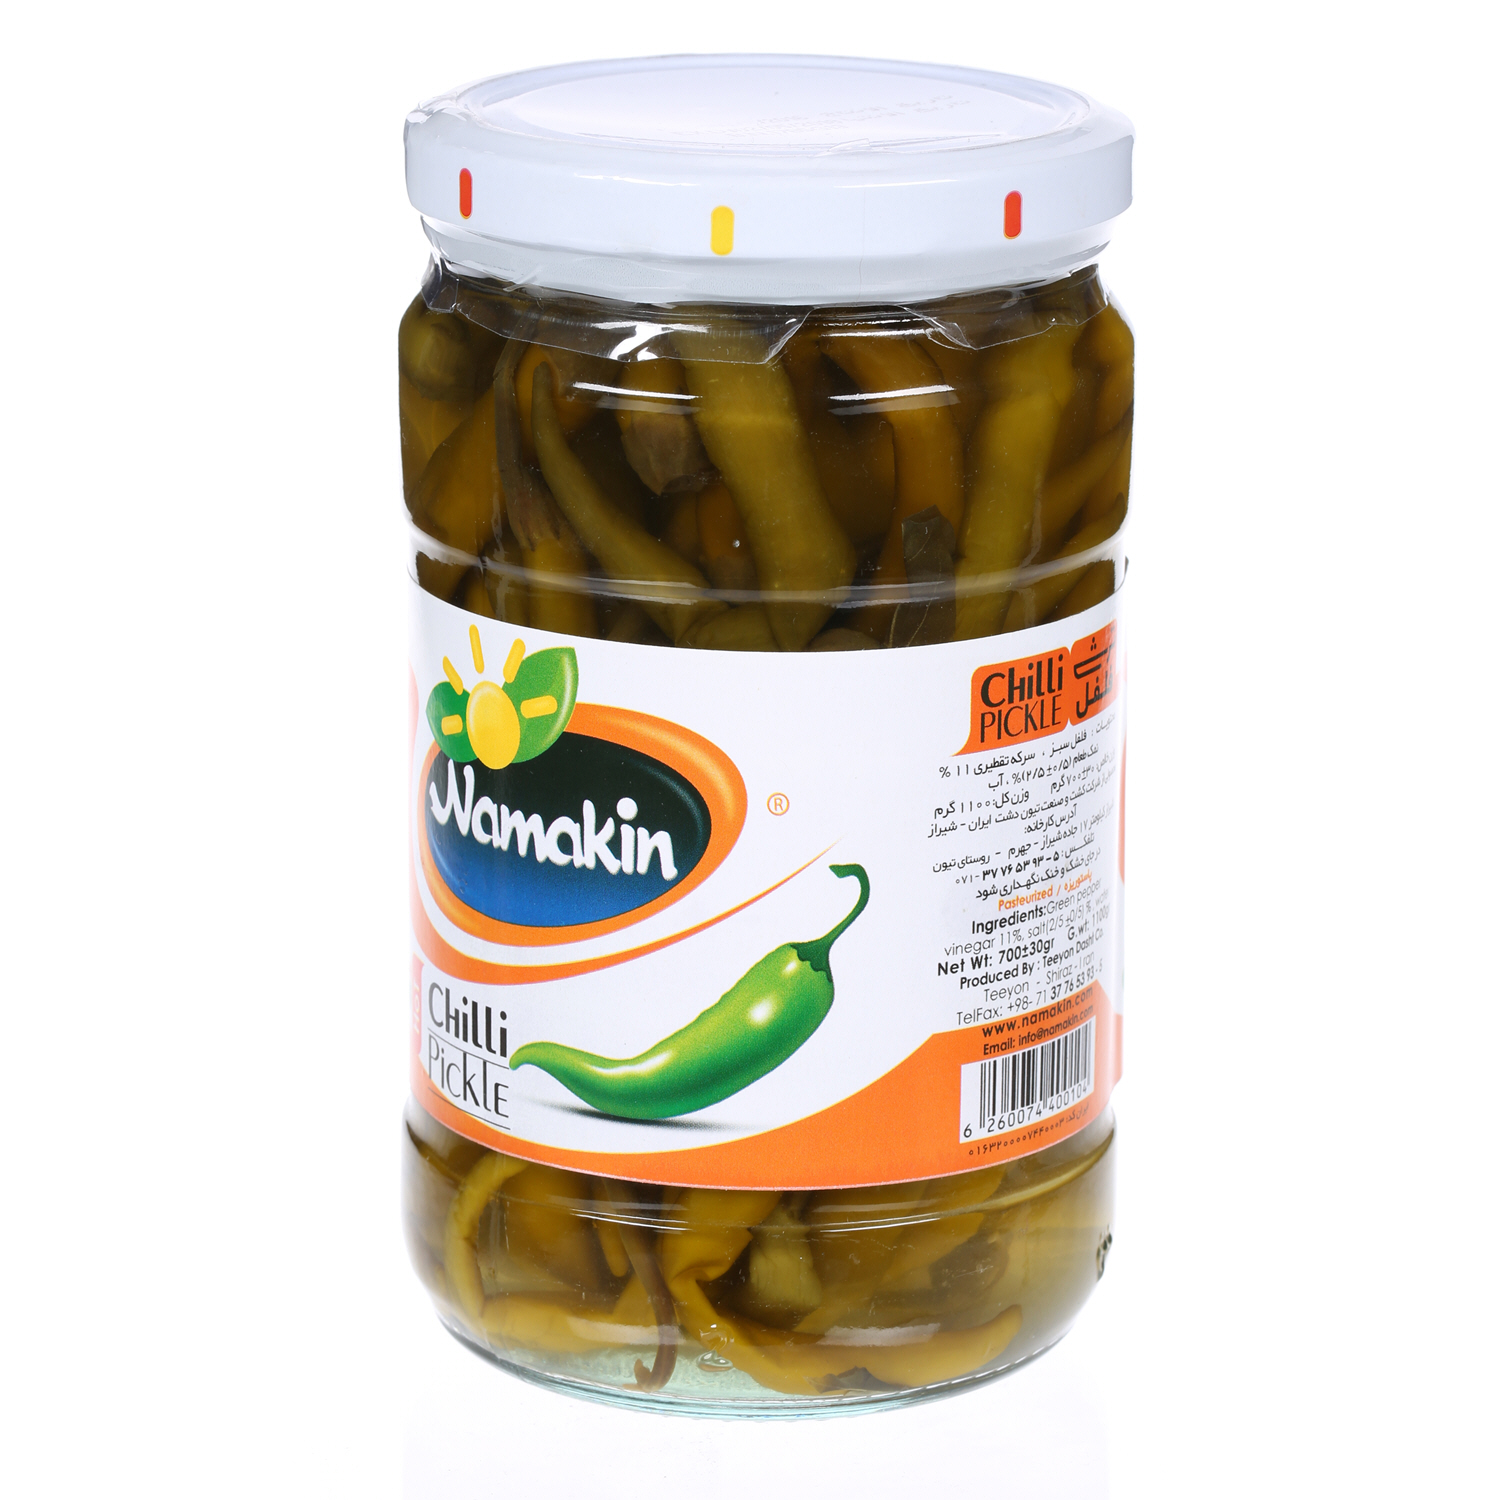 Namakin Chilli Pickle 1 Kg